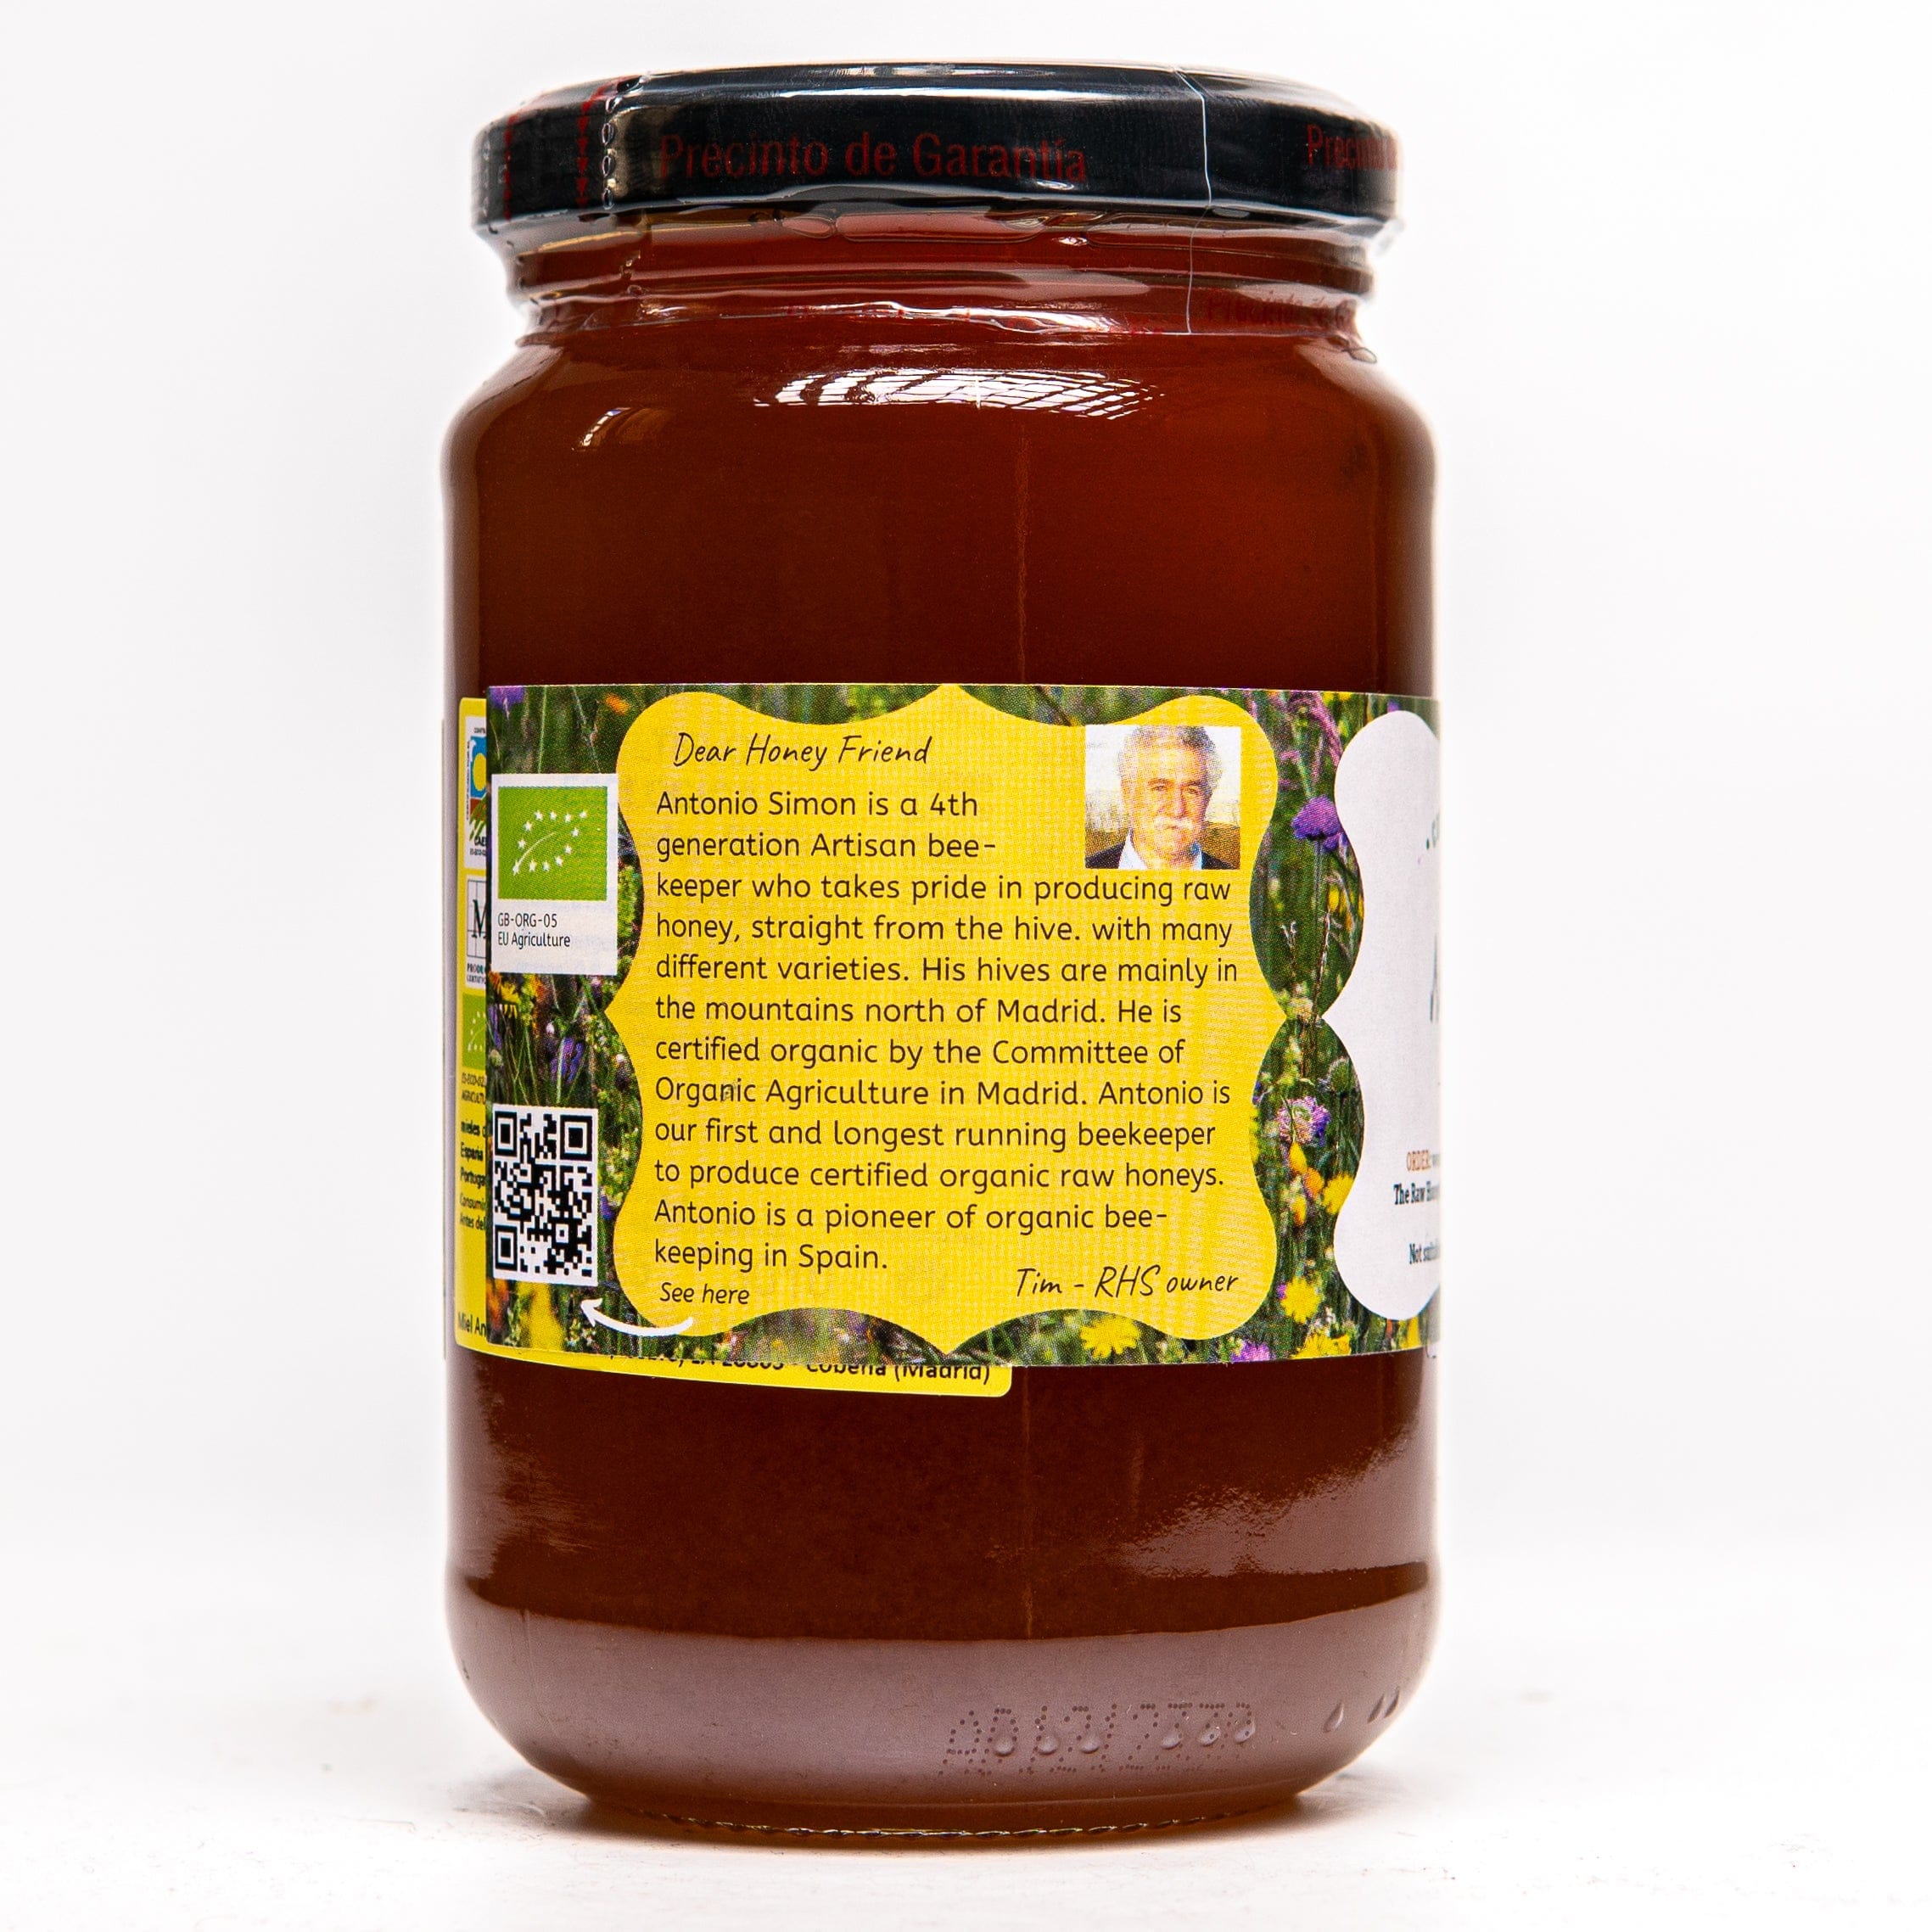 Raw Organic Multifloral Honey - 500g